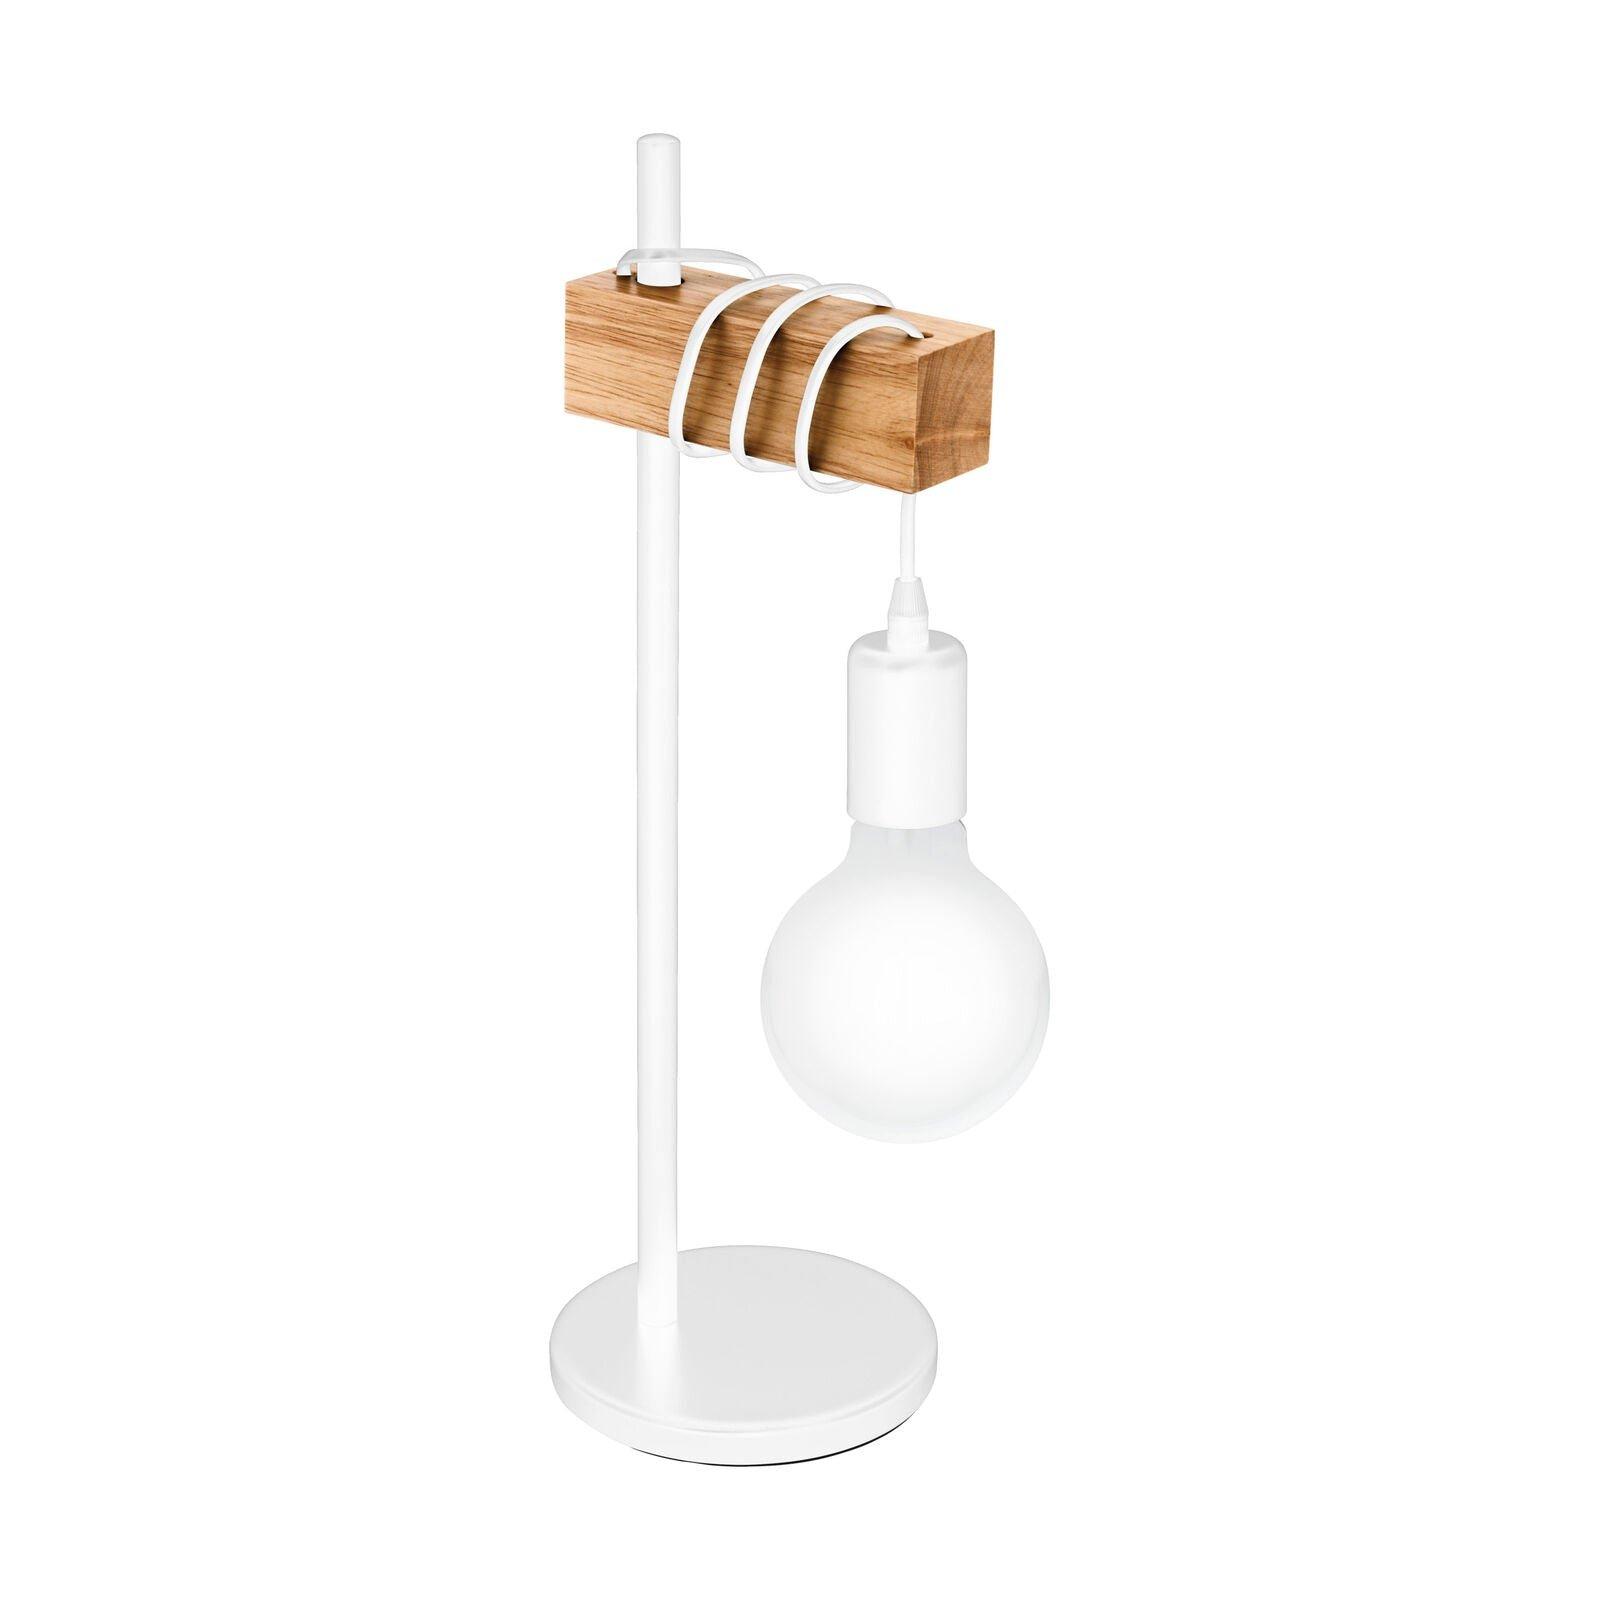 Table Lamp Desk Hangman Light White Steel & Wood Arm 1 x 10W E27 Bulb